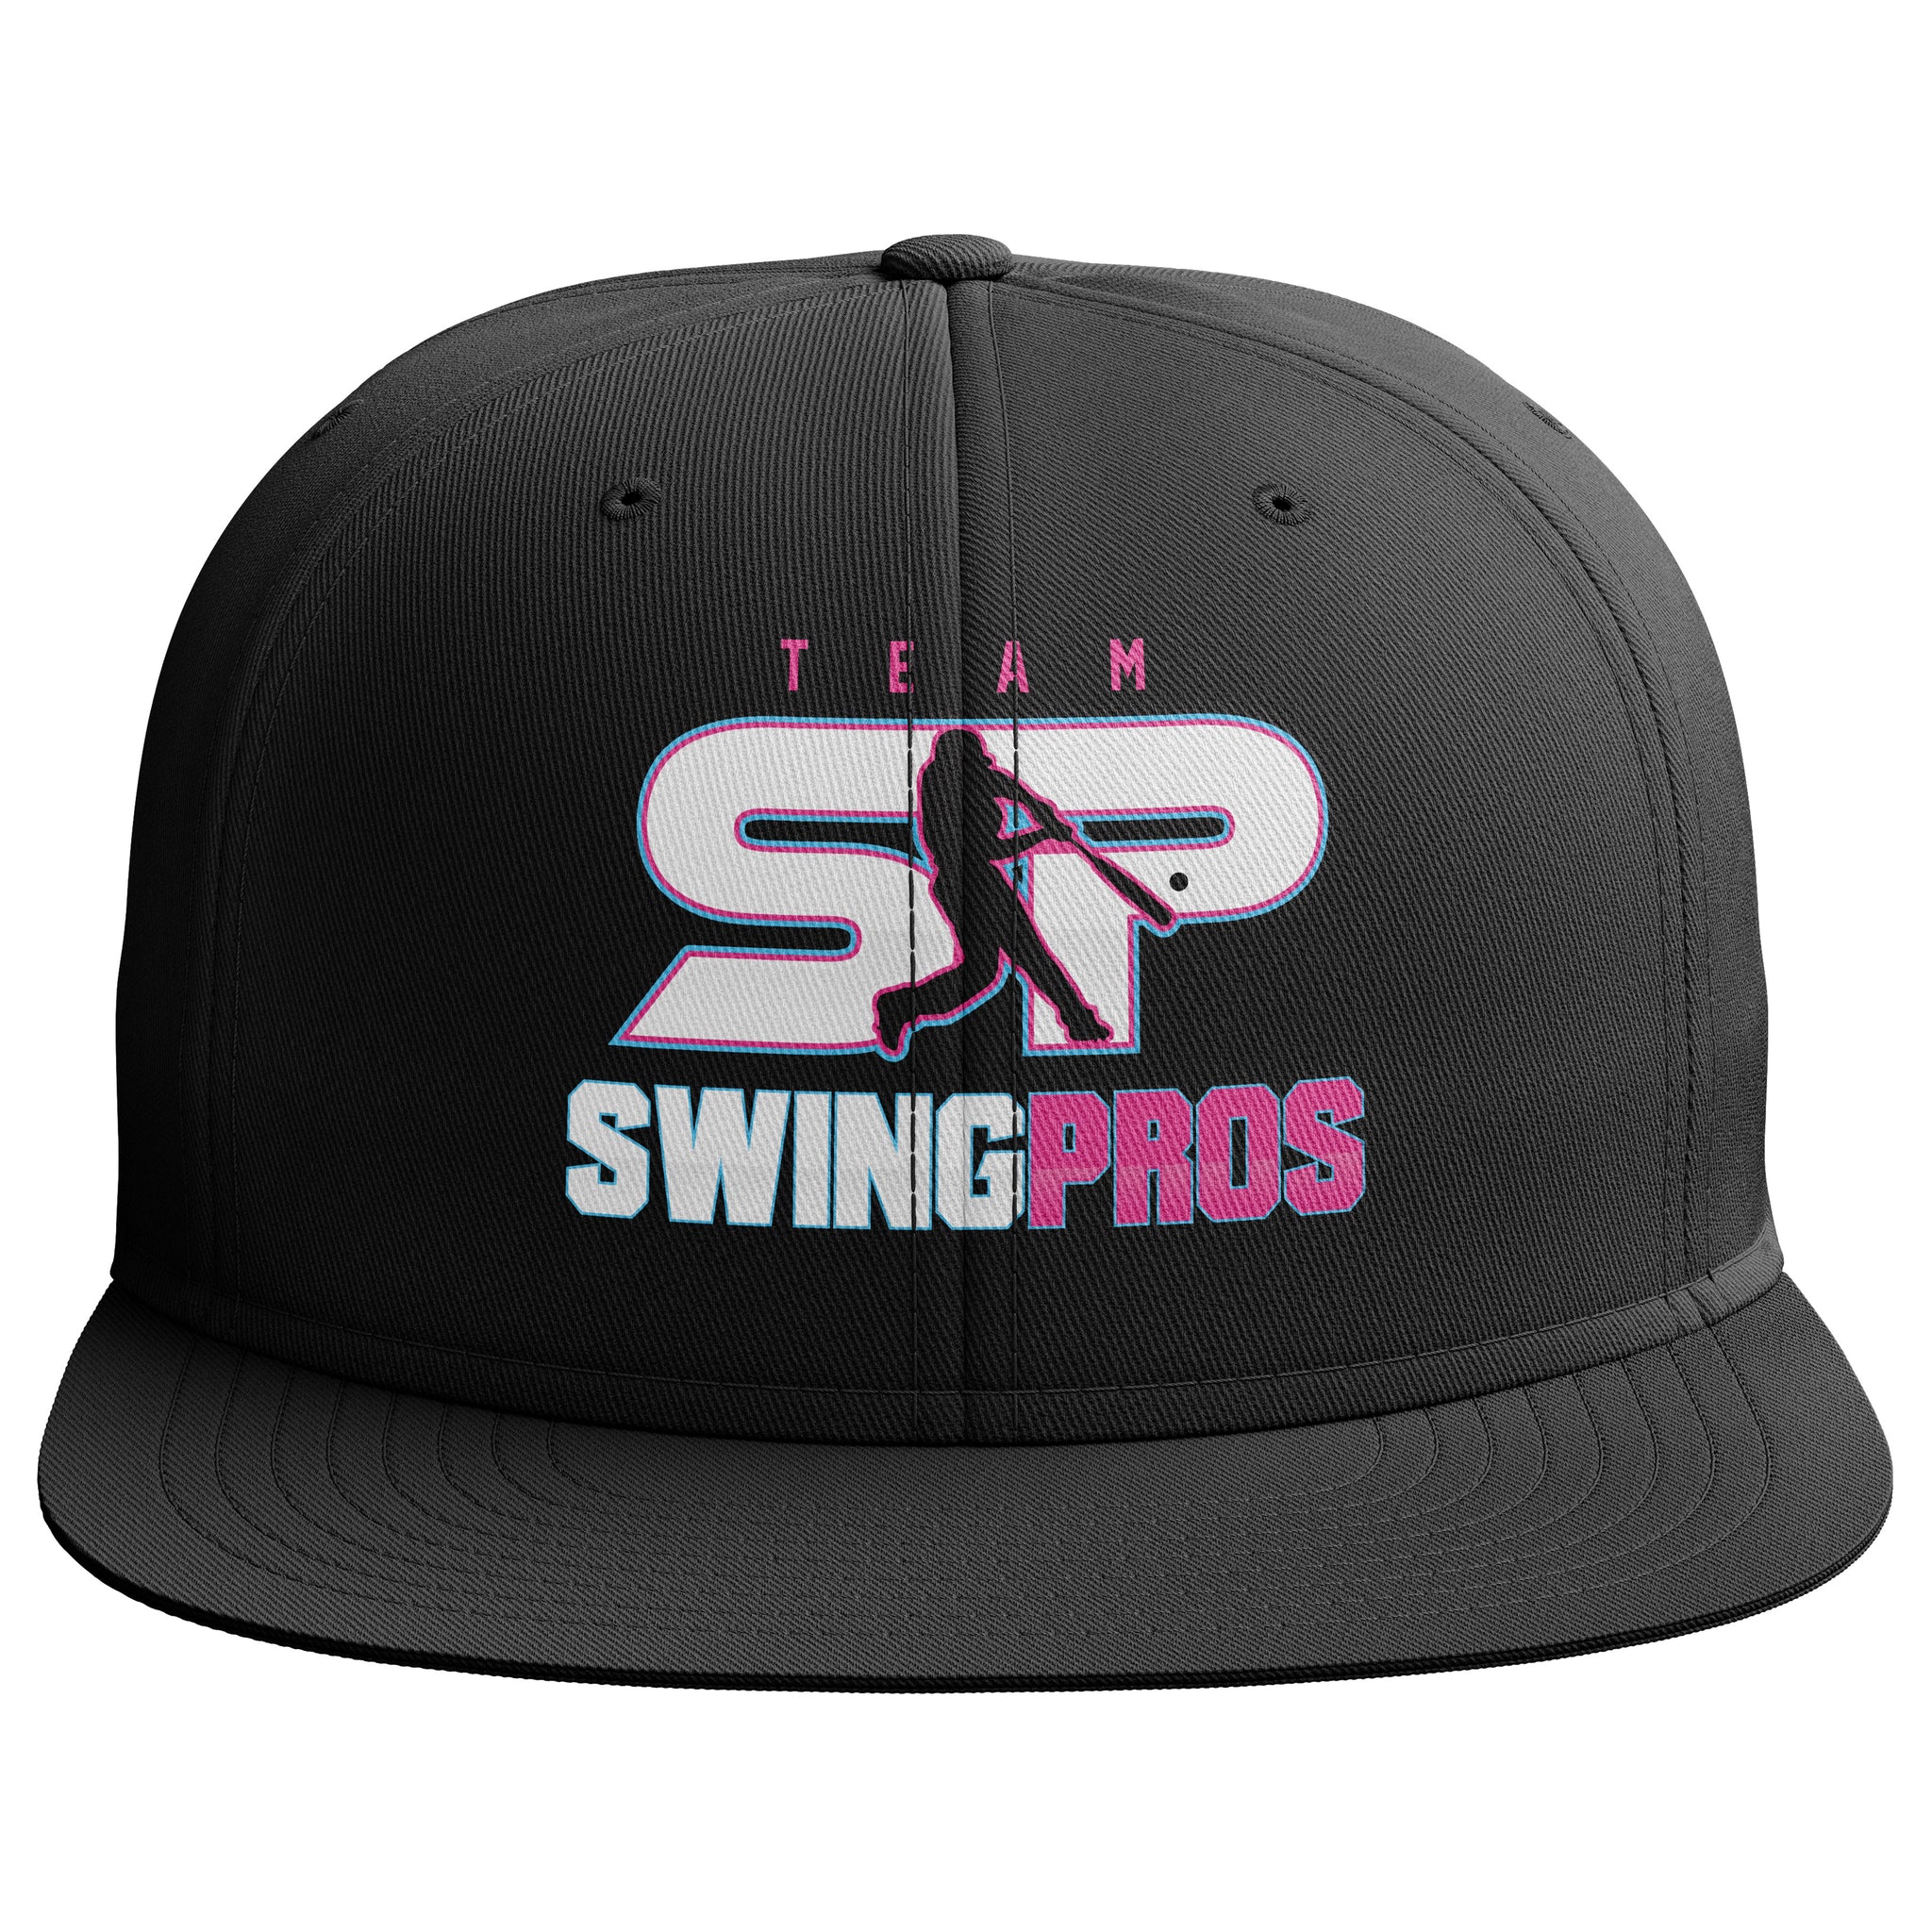 TEAM SWING PROS 1.0 PTS20 HAT